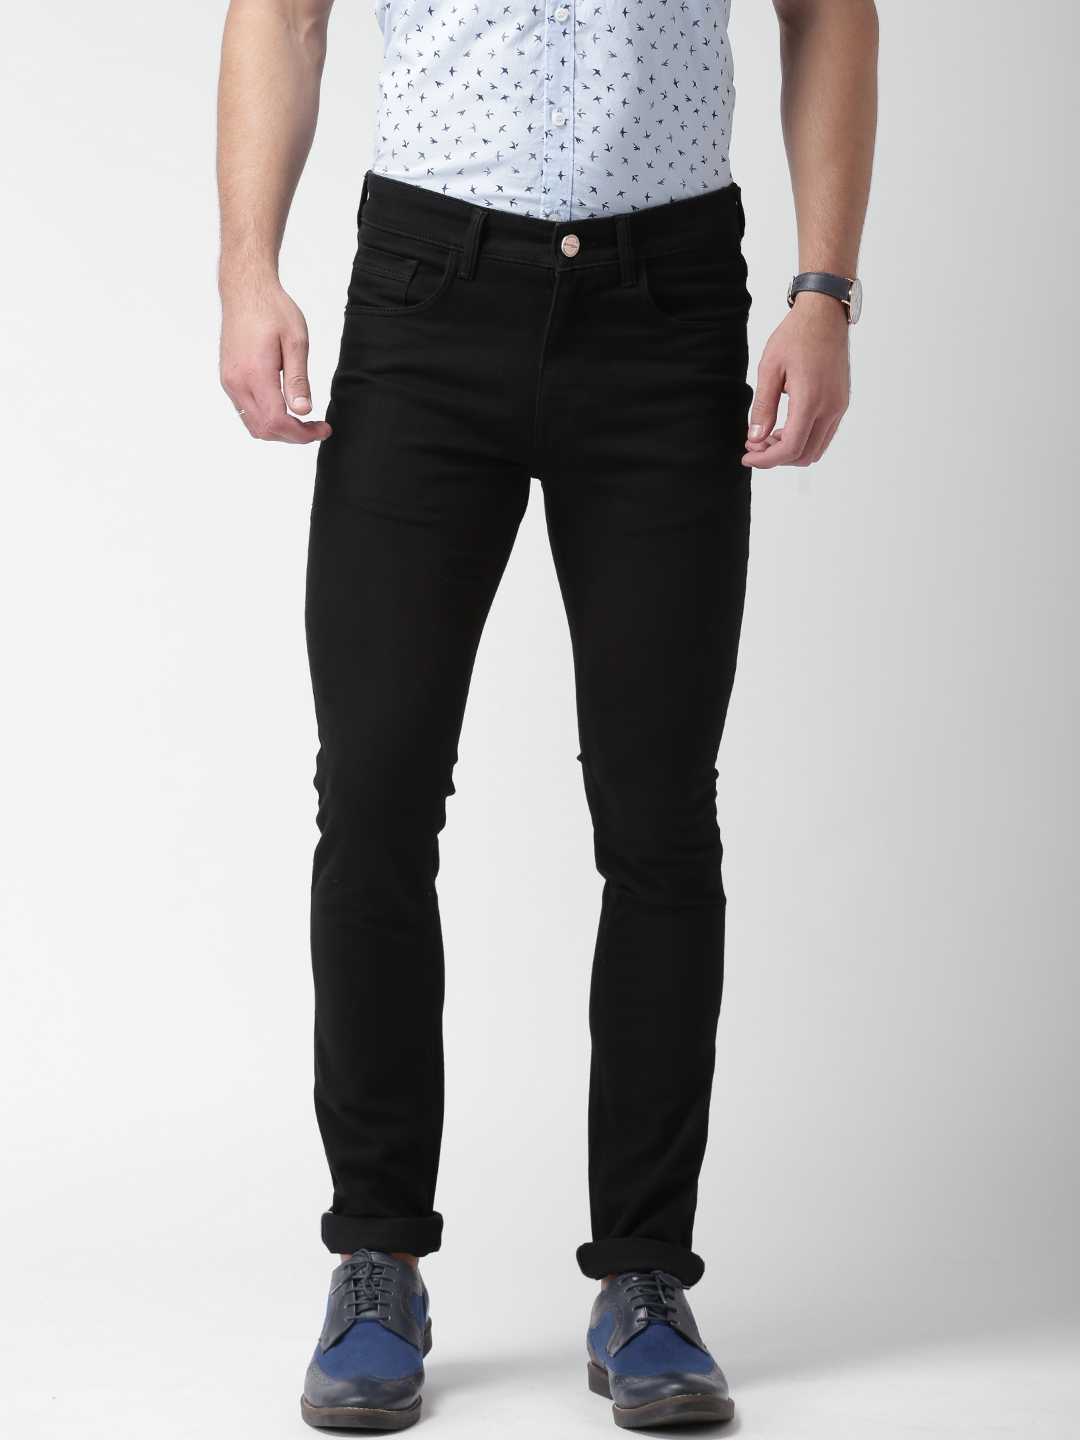 Buy Mast & Harbour Black Skinny Fit Jeans - Jeans for Men 1271314 | Myntra